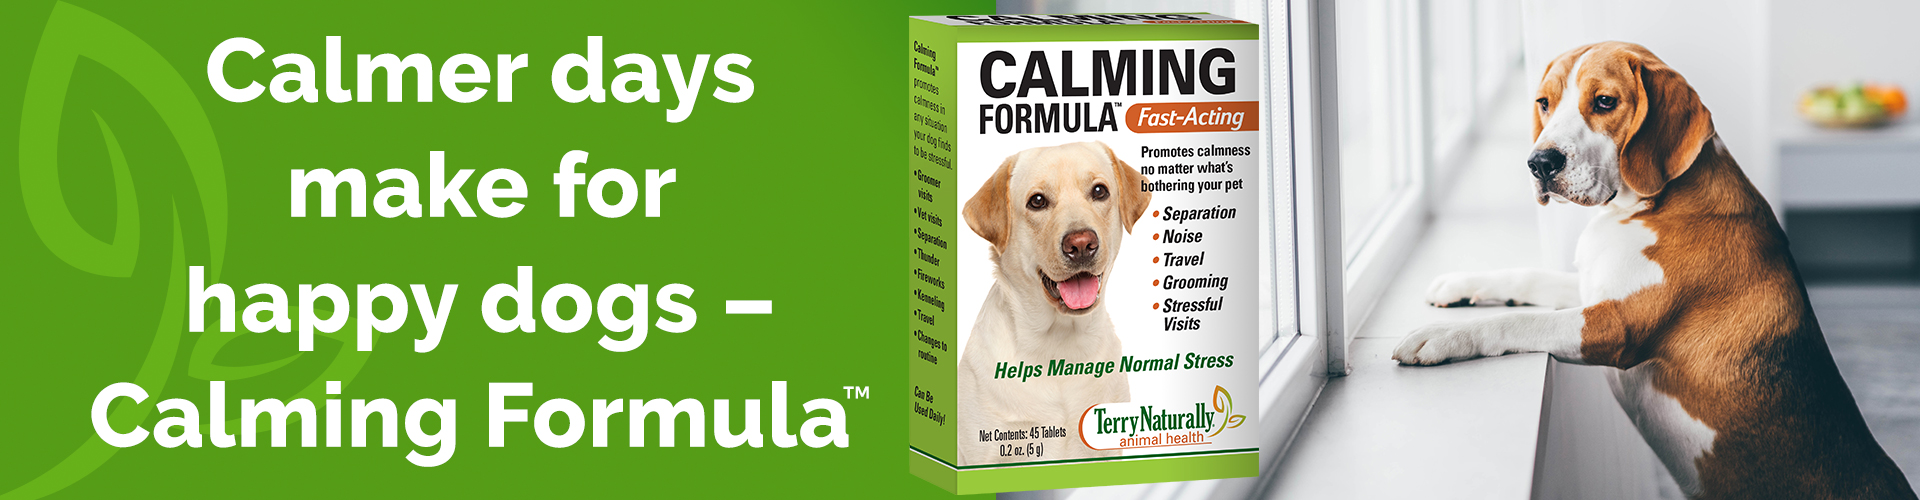 Calmer days make for happy dogs — CALMING FORMULA™